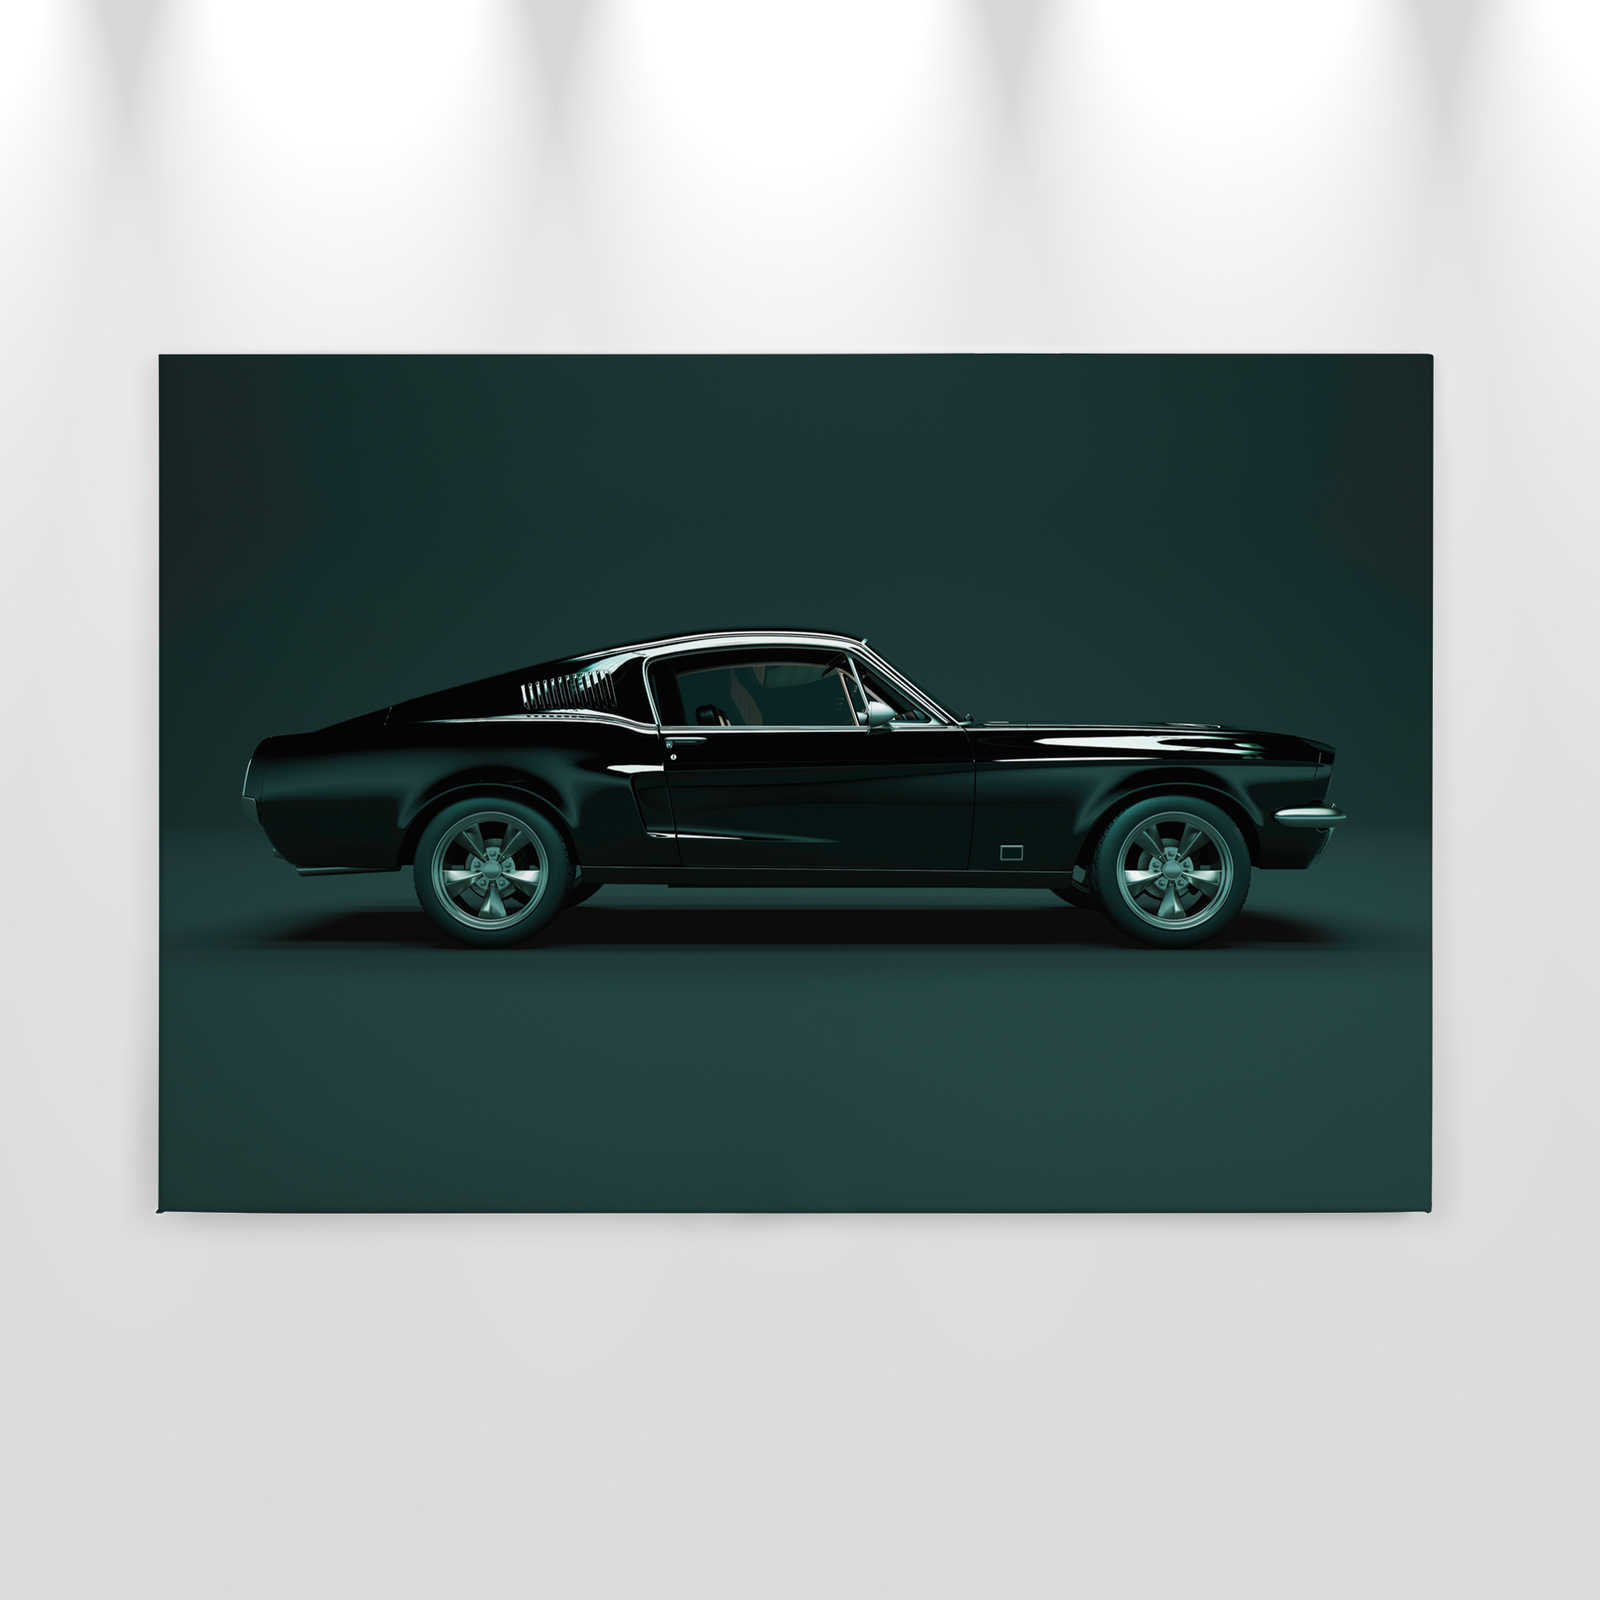             Mustang 1 - Quadro su tela, vista laterale Mustang, vintage - 0,90 m x 0,60 m
        